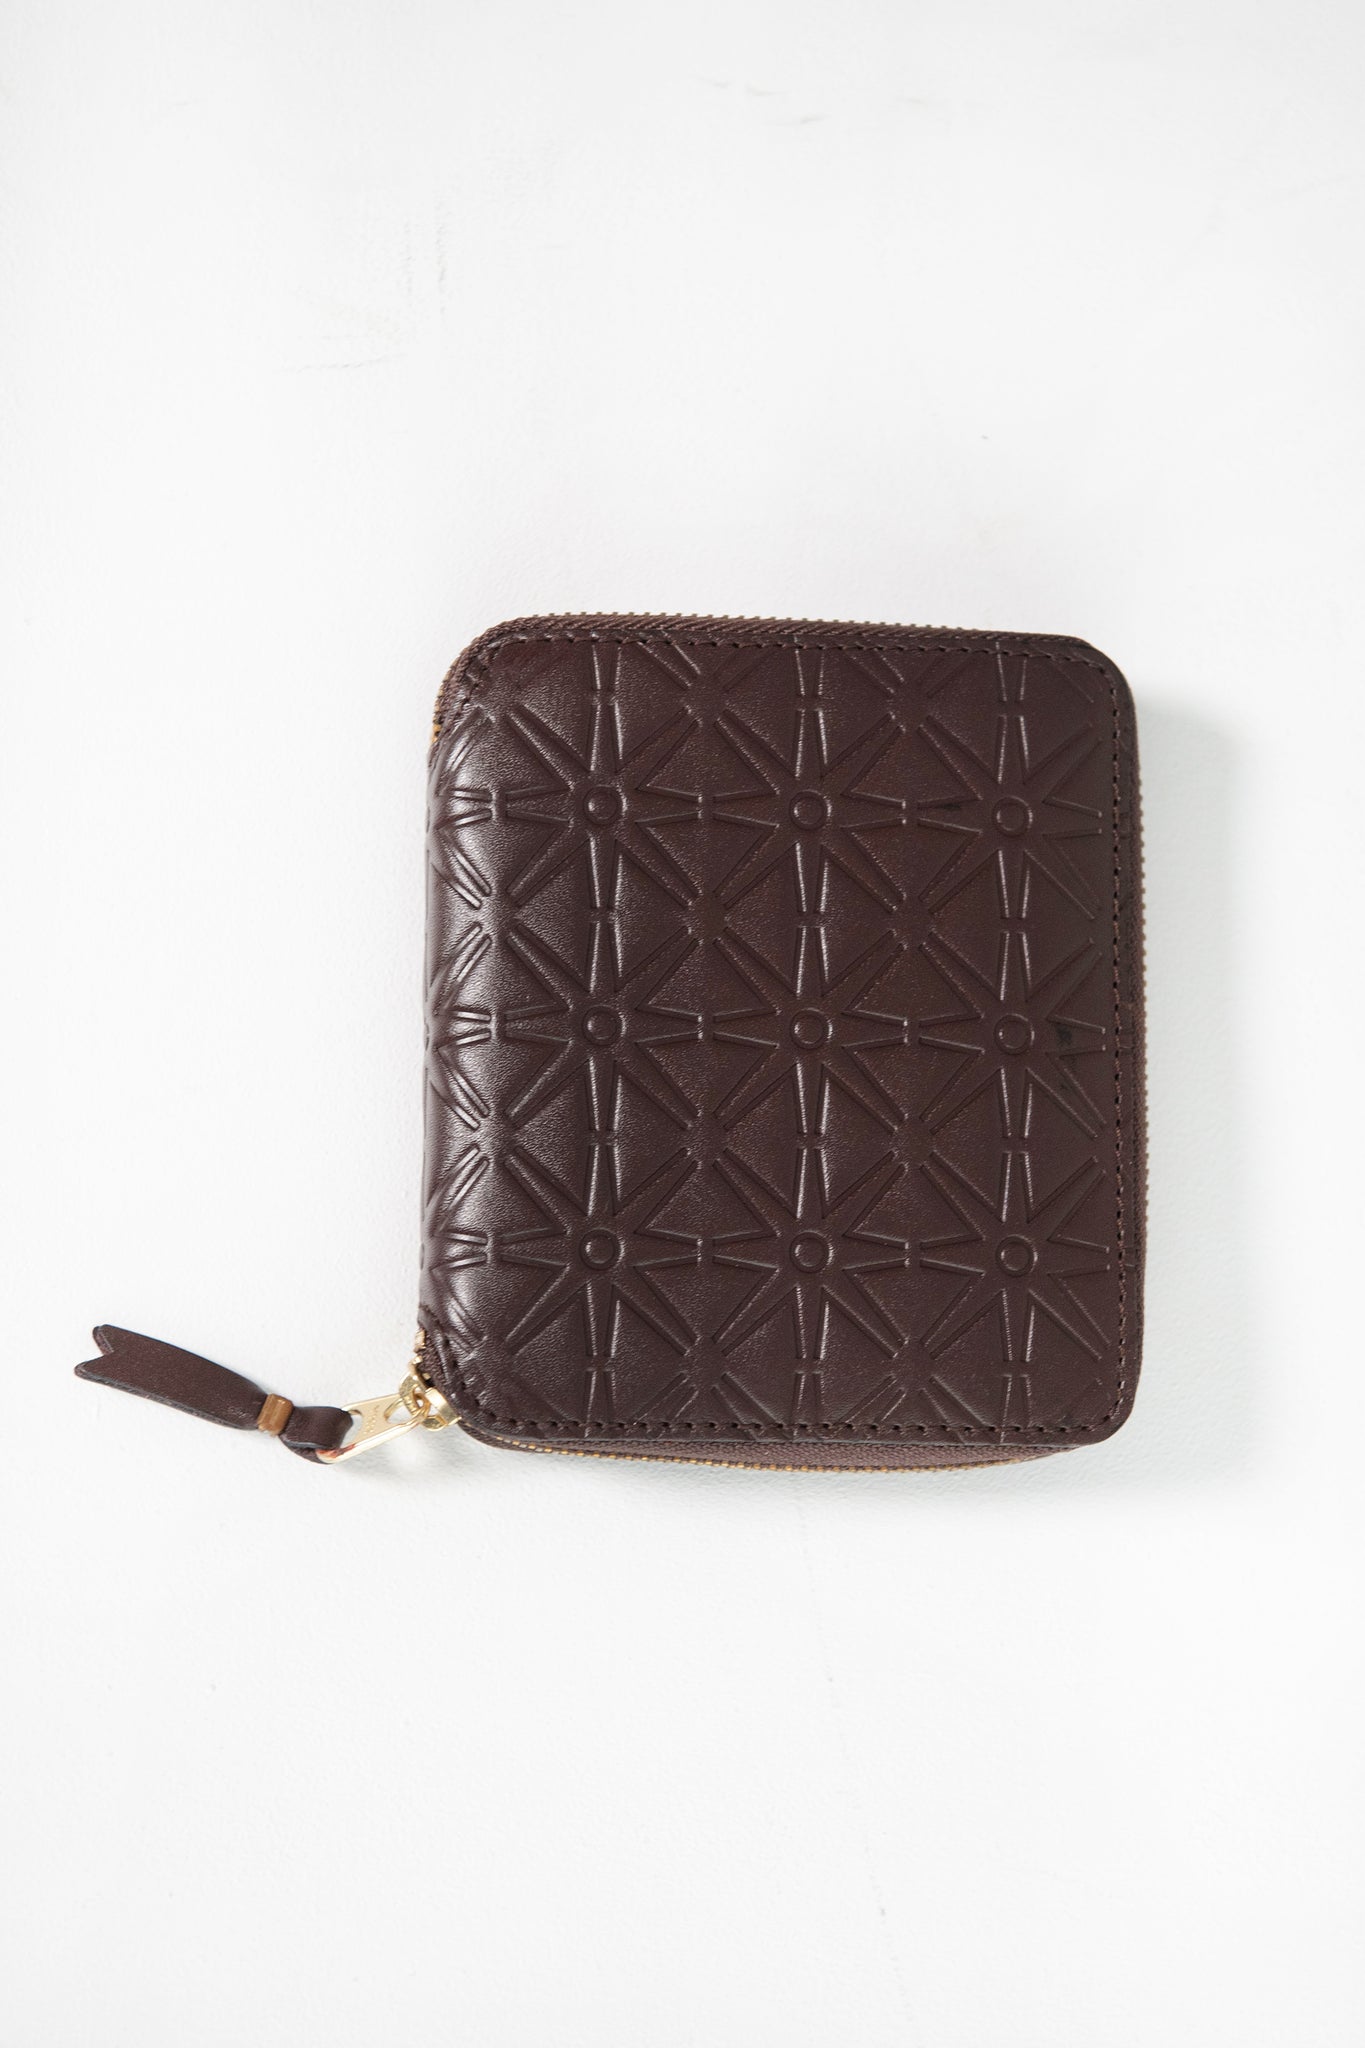 Comme des Garçons - Embossed Leather Wallet, Brown